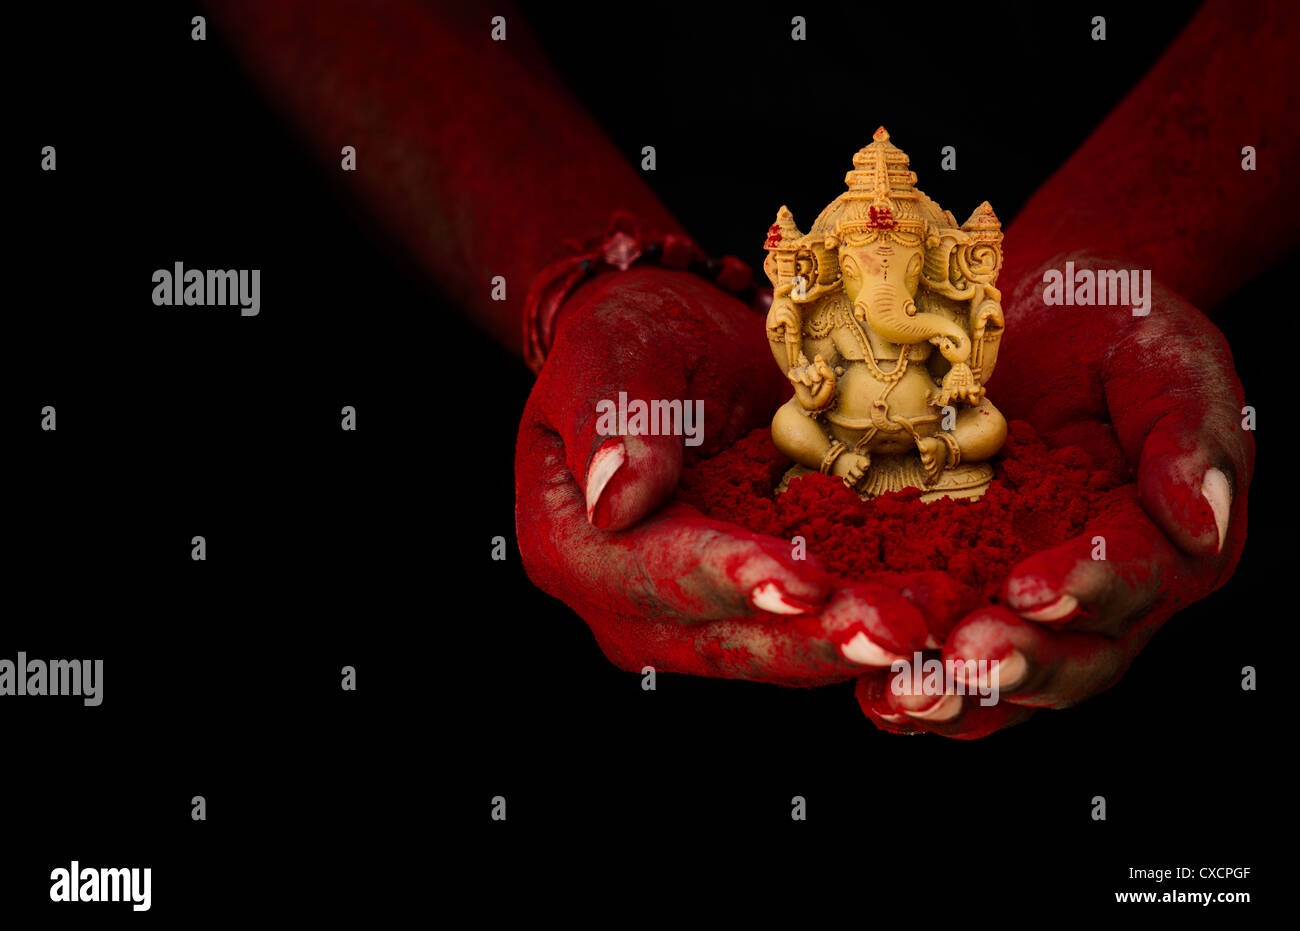 Hindu Elephant God. Red powder covered indian mans hand holding Lord Ganesha statue against black background Stock Photo